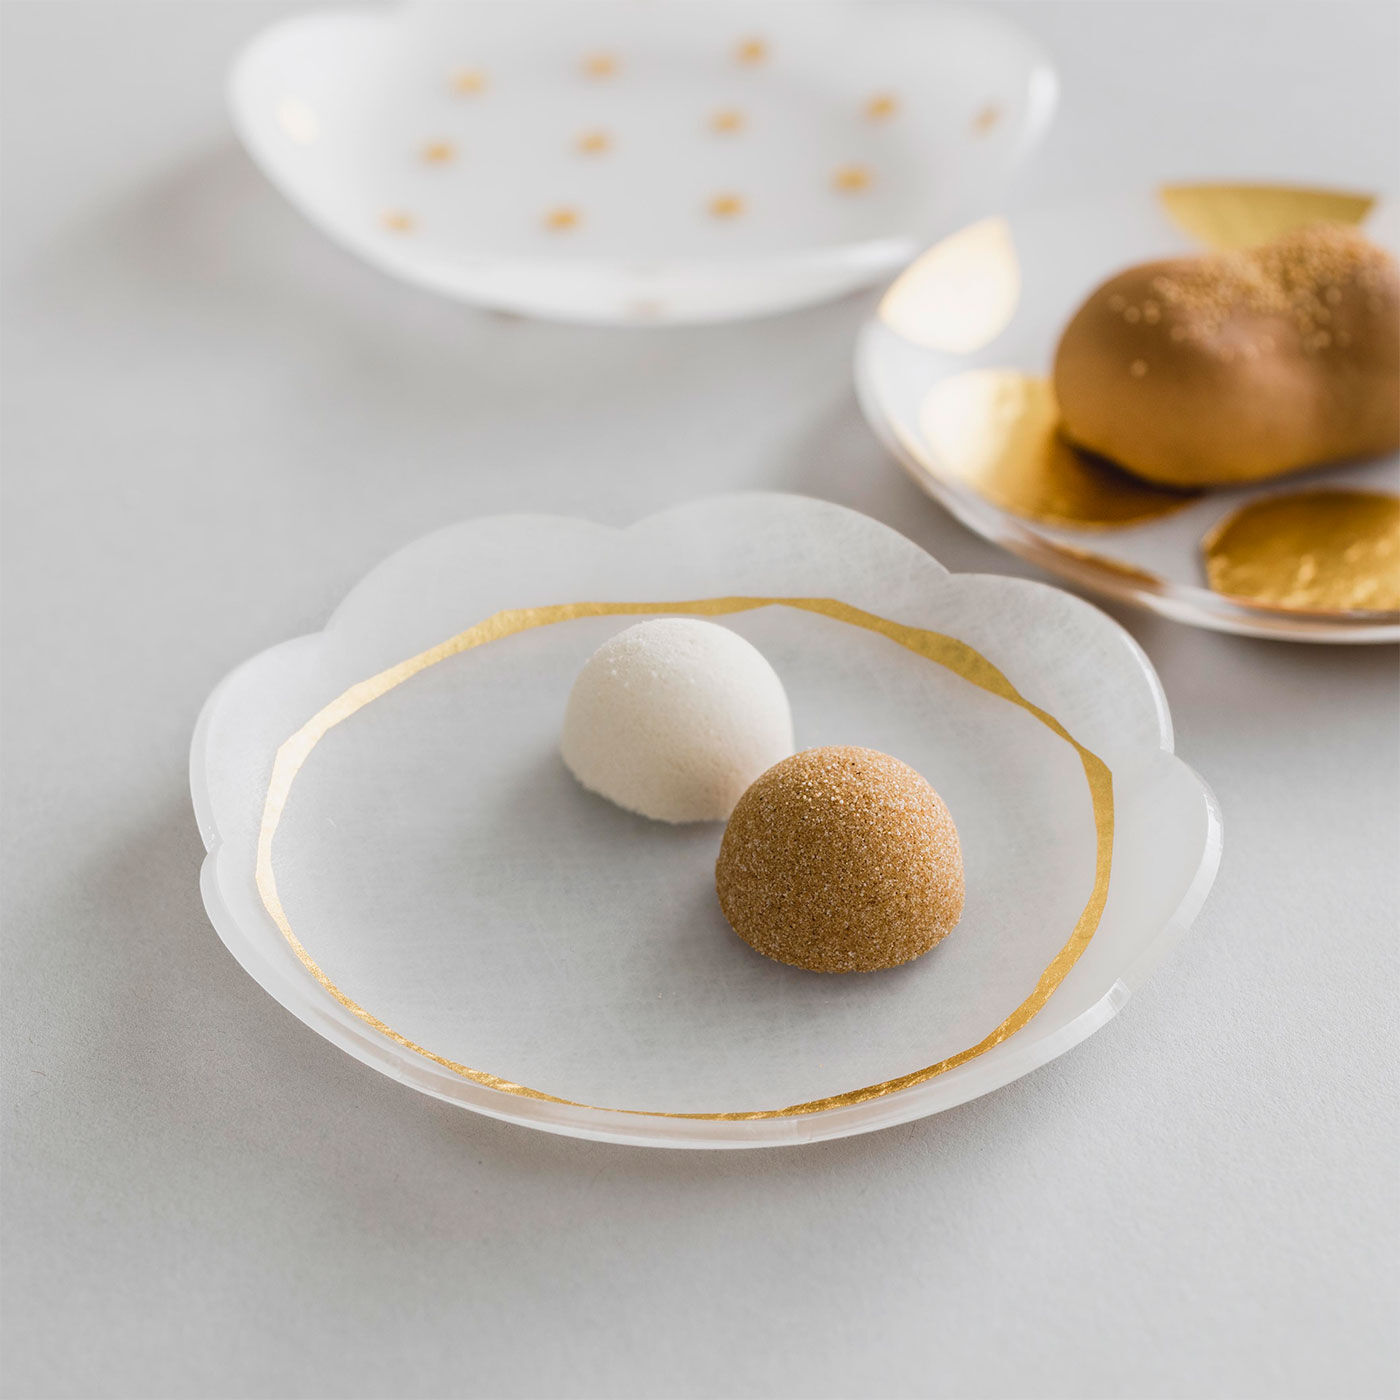 SeeMONO|マットな質感に金色の箔押しが映える木箱入り豆皿２枚セット|手のひらサイズでお茶請けにぴったり。